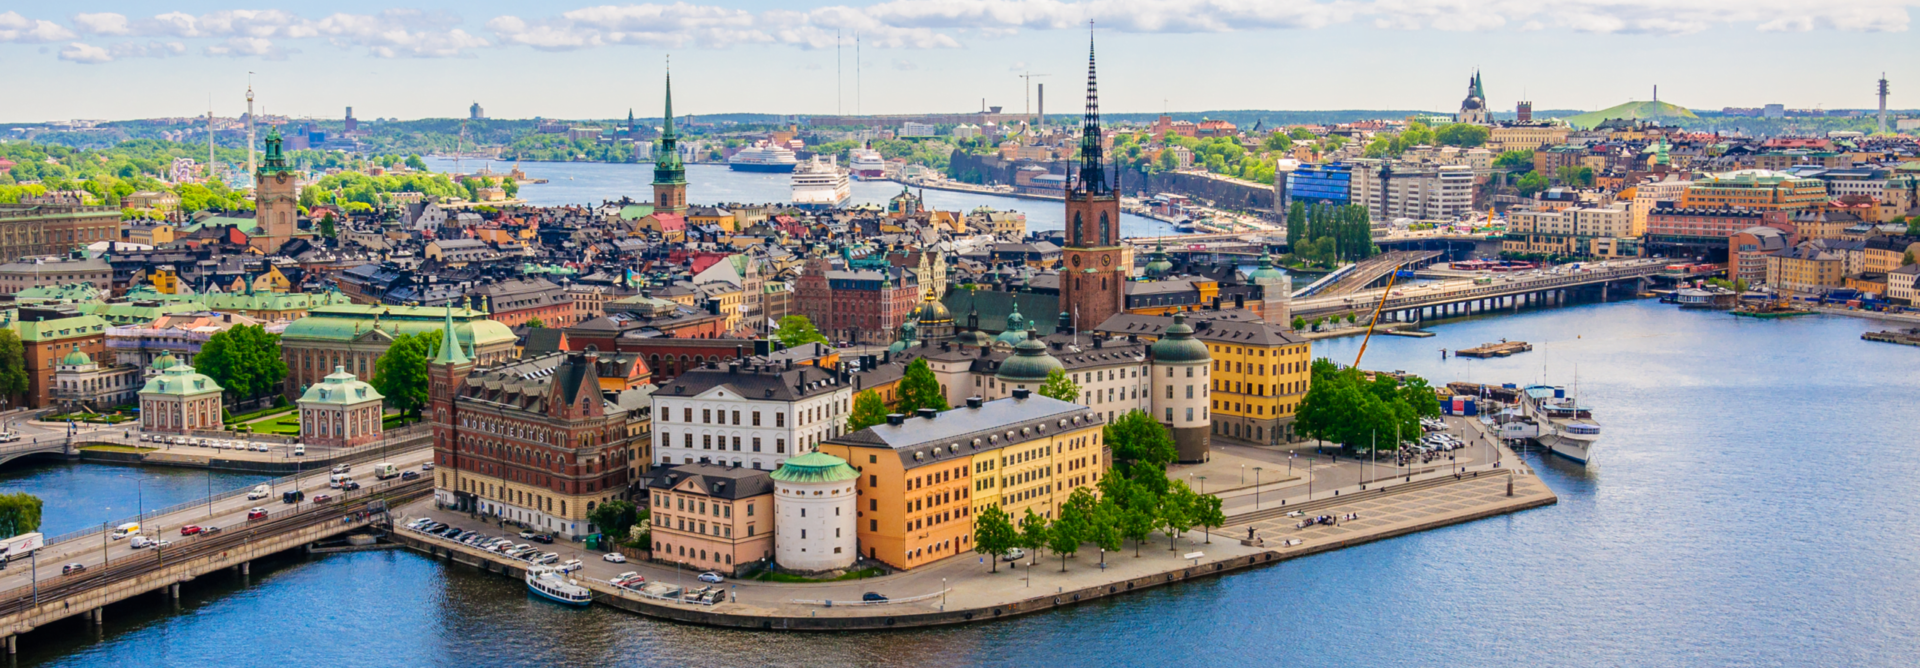 80_Capital Cities of Scandinavia